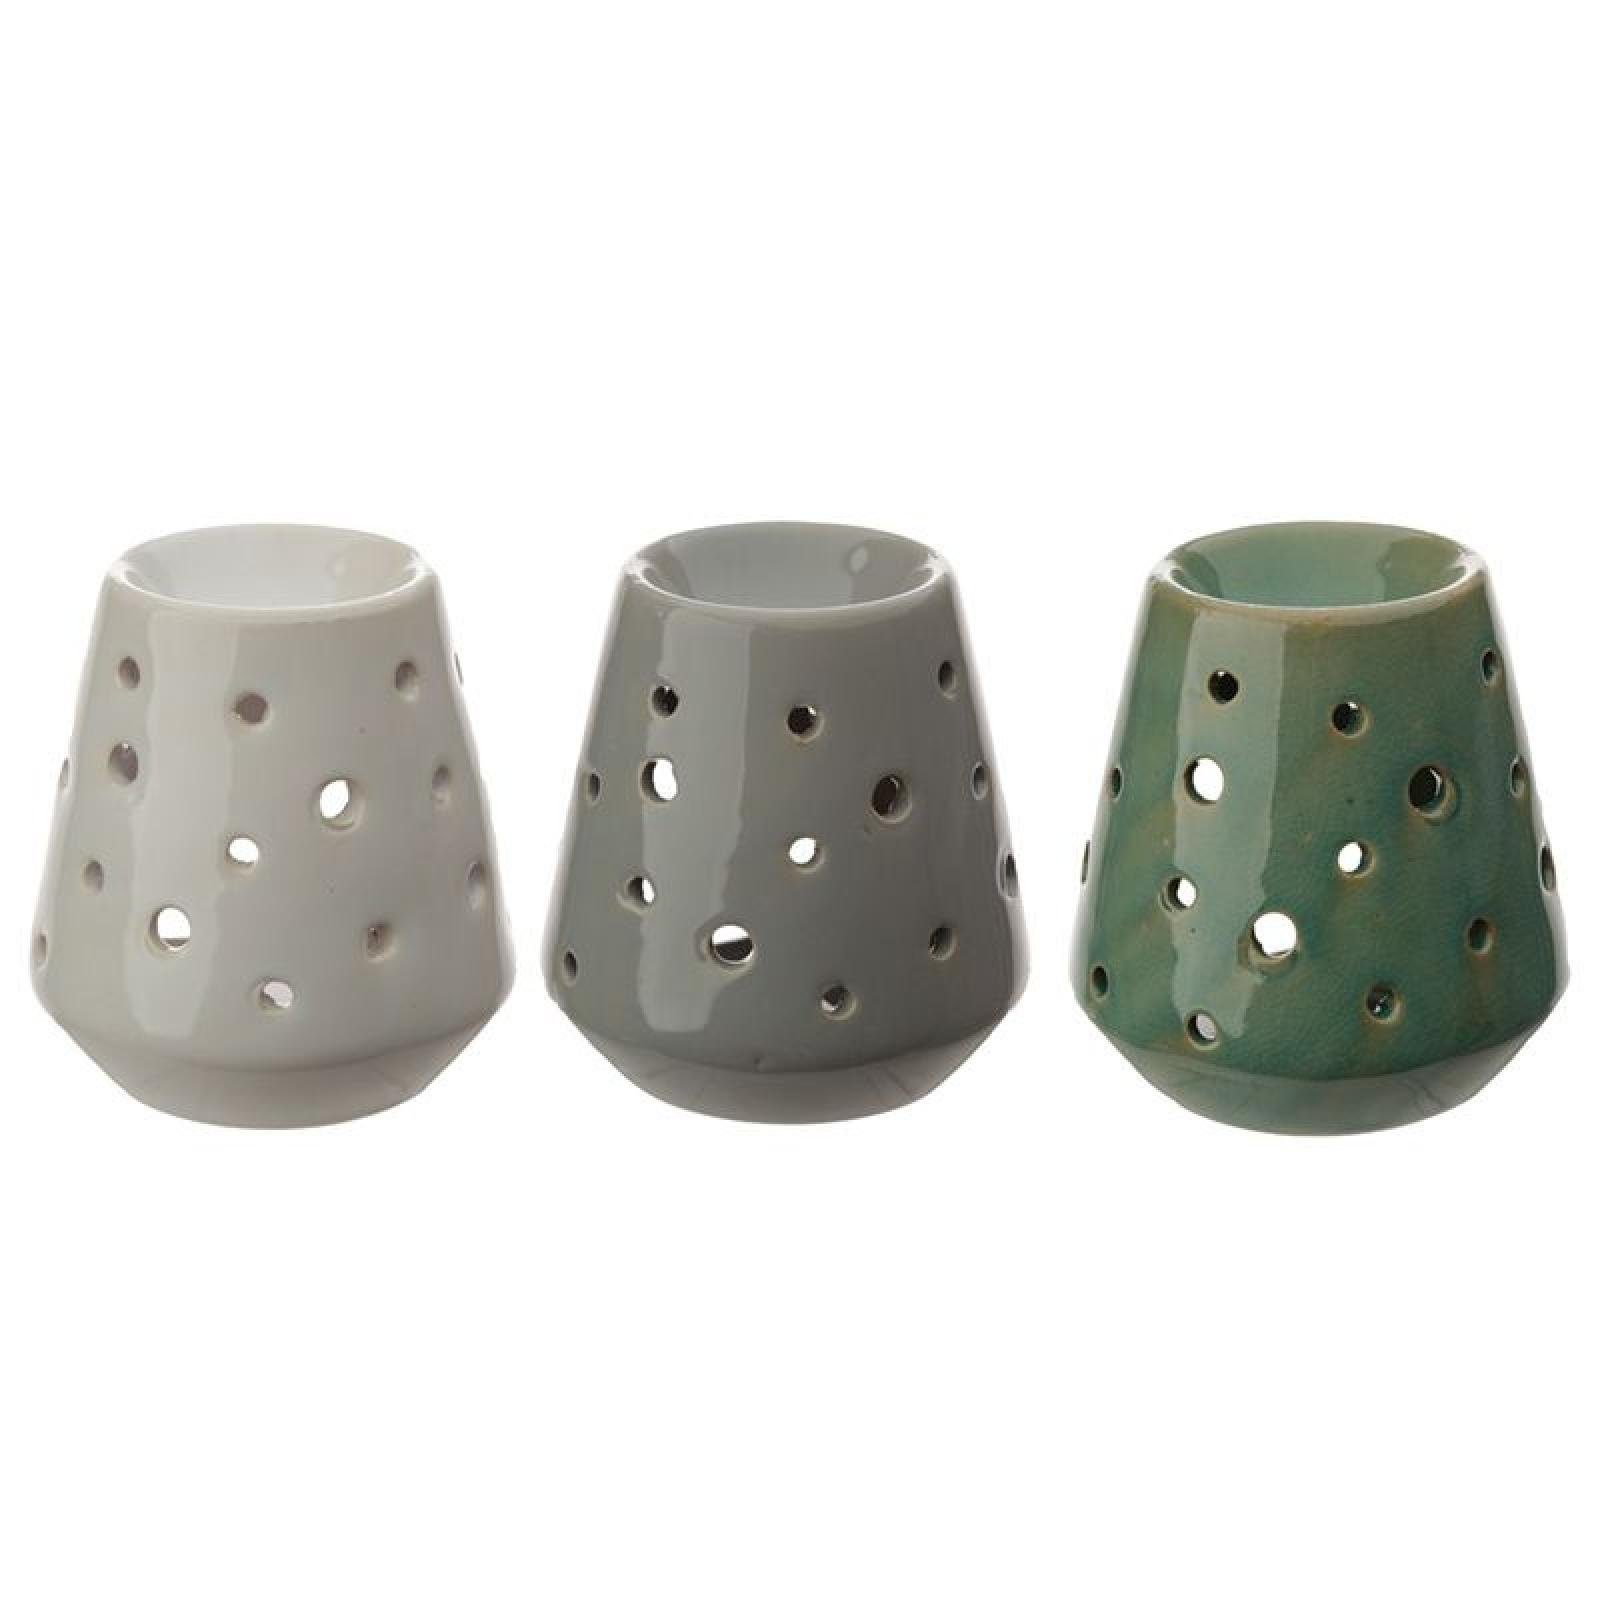 Puckator Duftlampe Eden Konierte Duftlampe aus Keramik mit runden Ausschnitten | Duftlampen